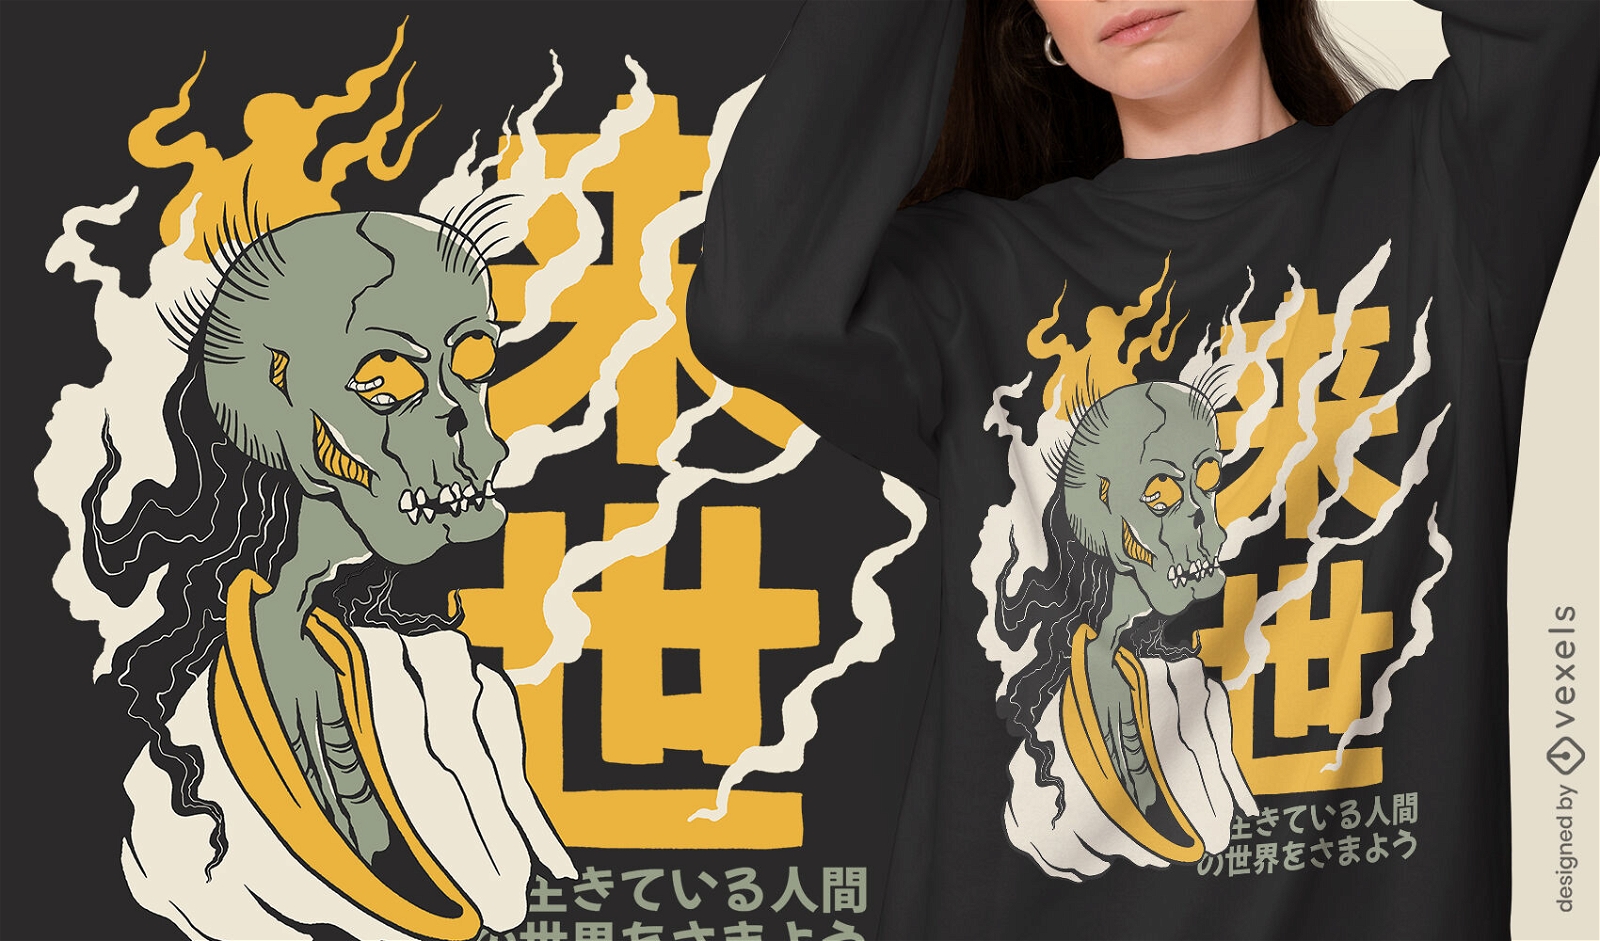 Yurei ghost kanji t-shirt design